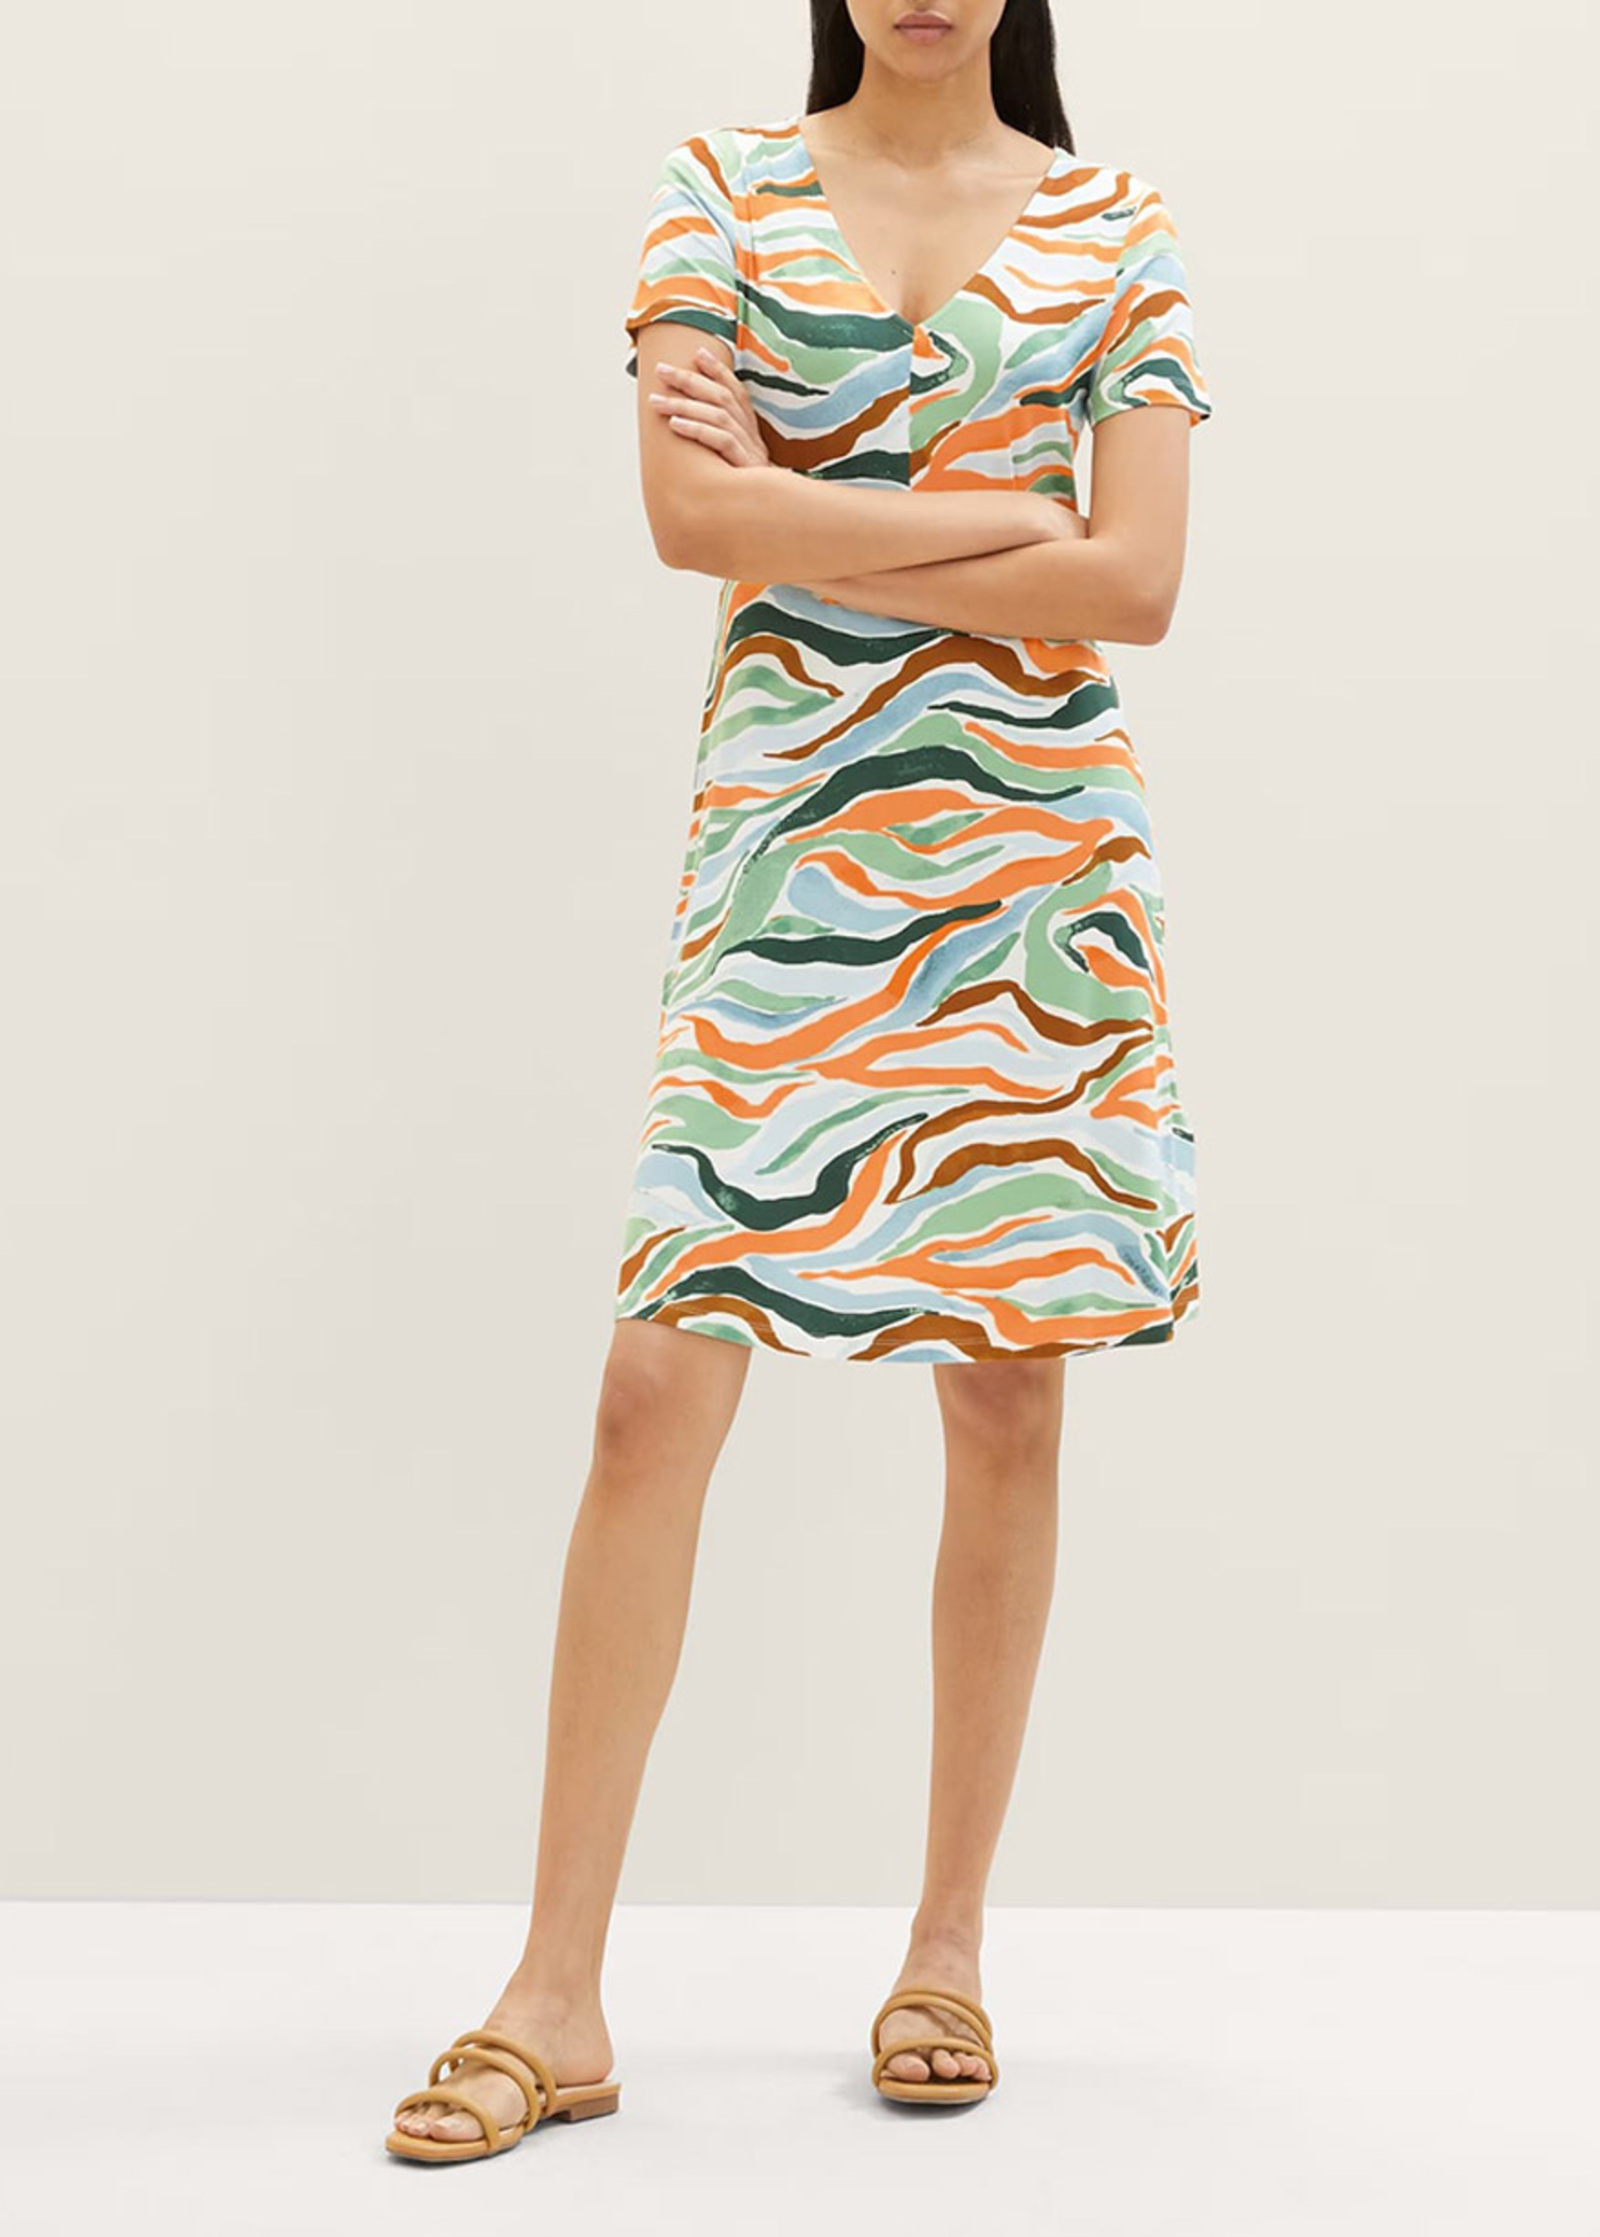 38 Tom Wavy Design Dress Colorful - Size Tailor®